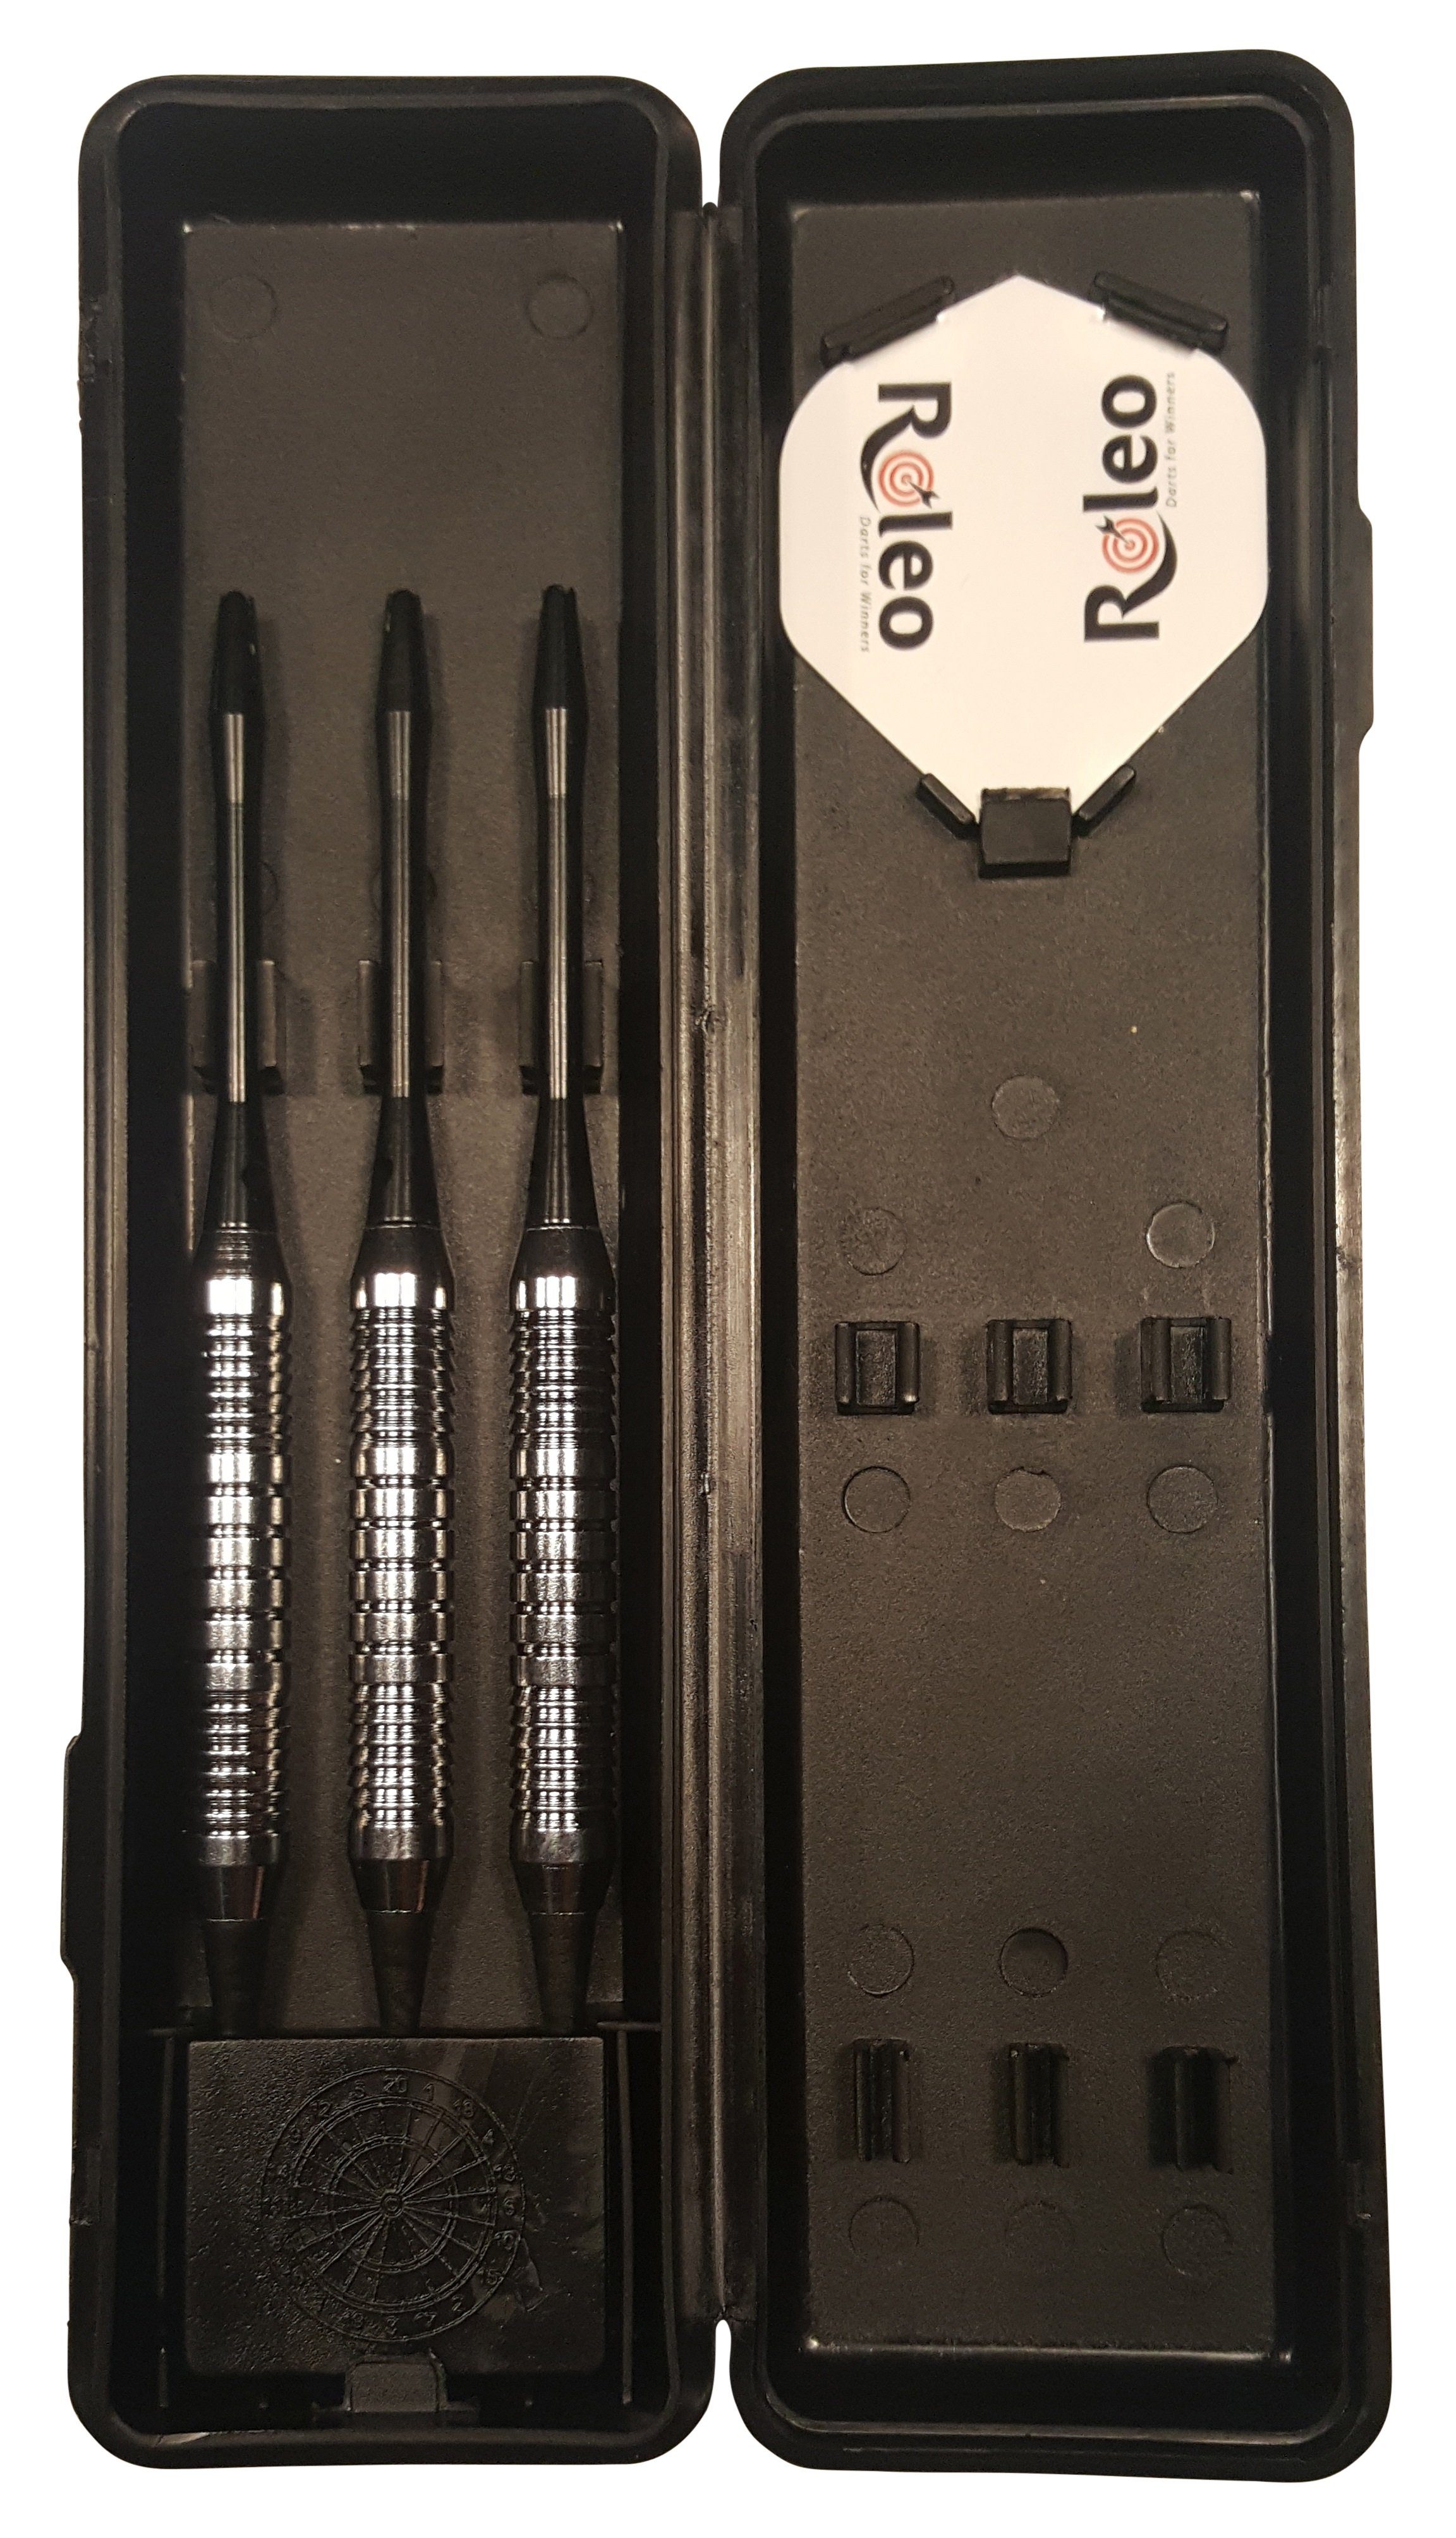 Ausrüstung Dartpfeile Roleo Dartpfeil Roleo Softdarts Pfeile - RS-1 - 3er Set inkl. Dartbox - 16g